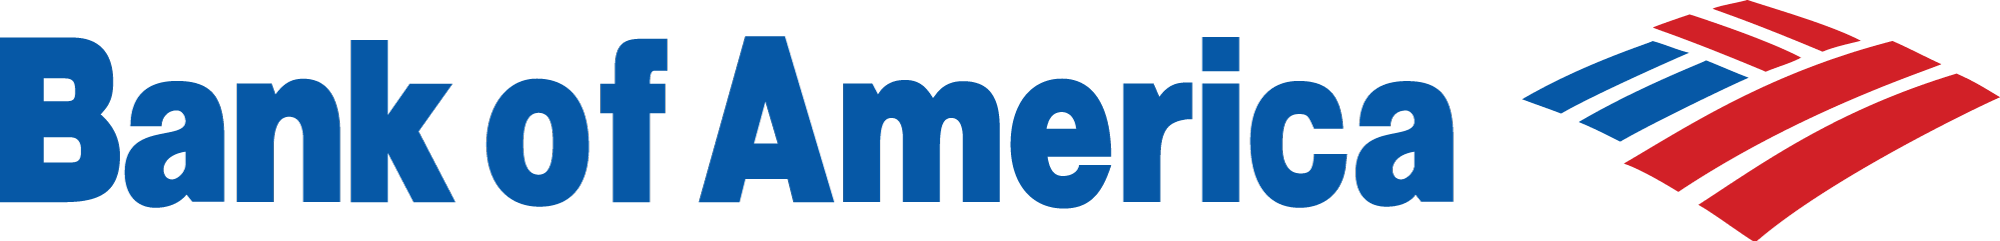 bankofamerica logo